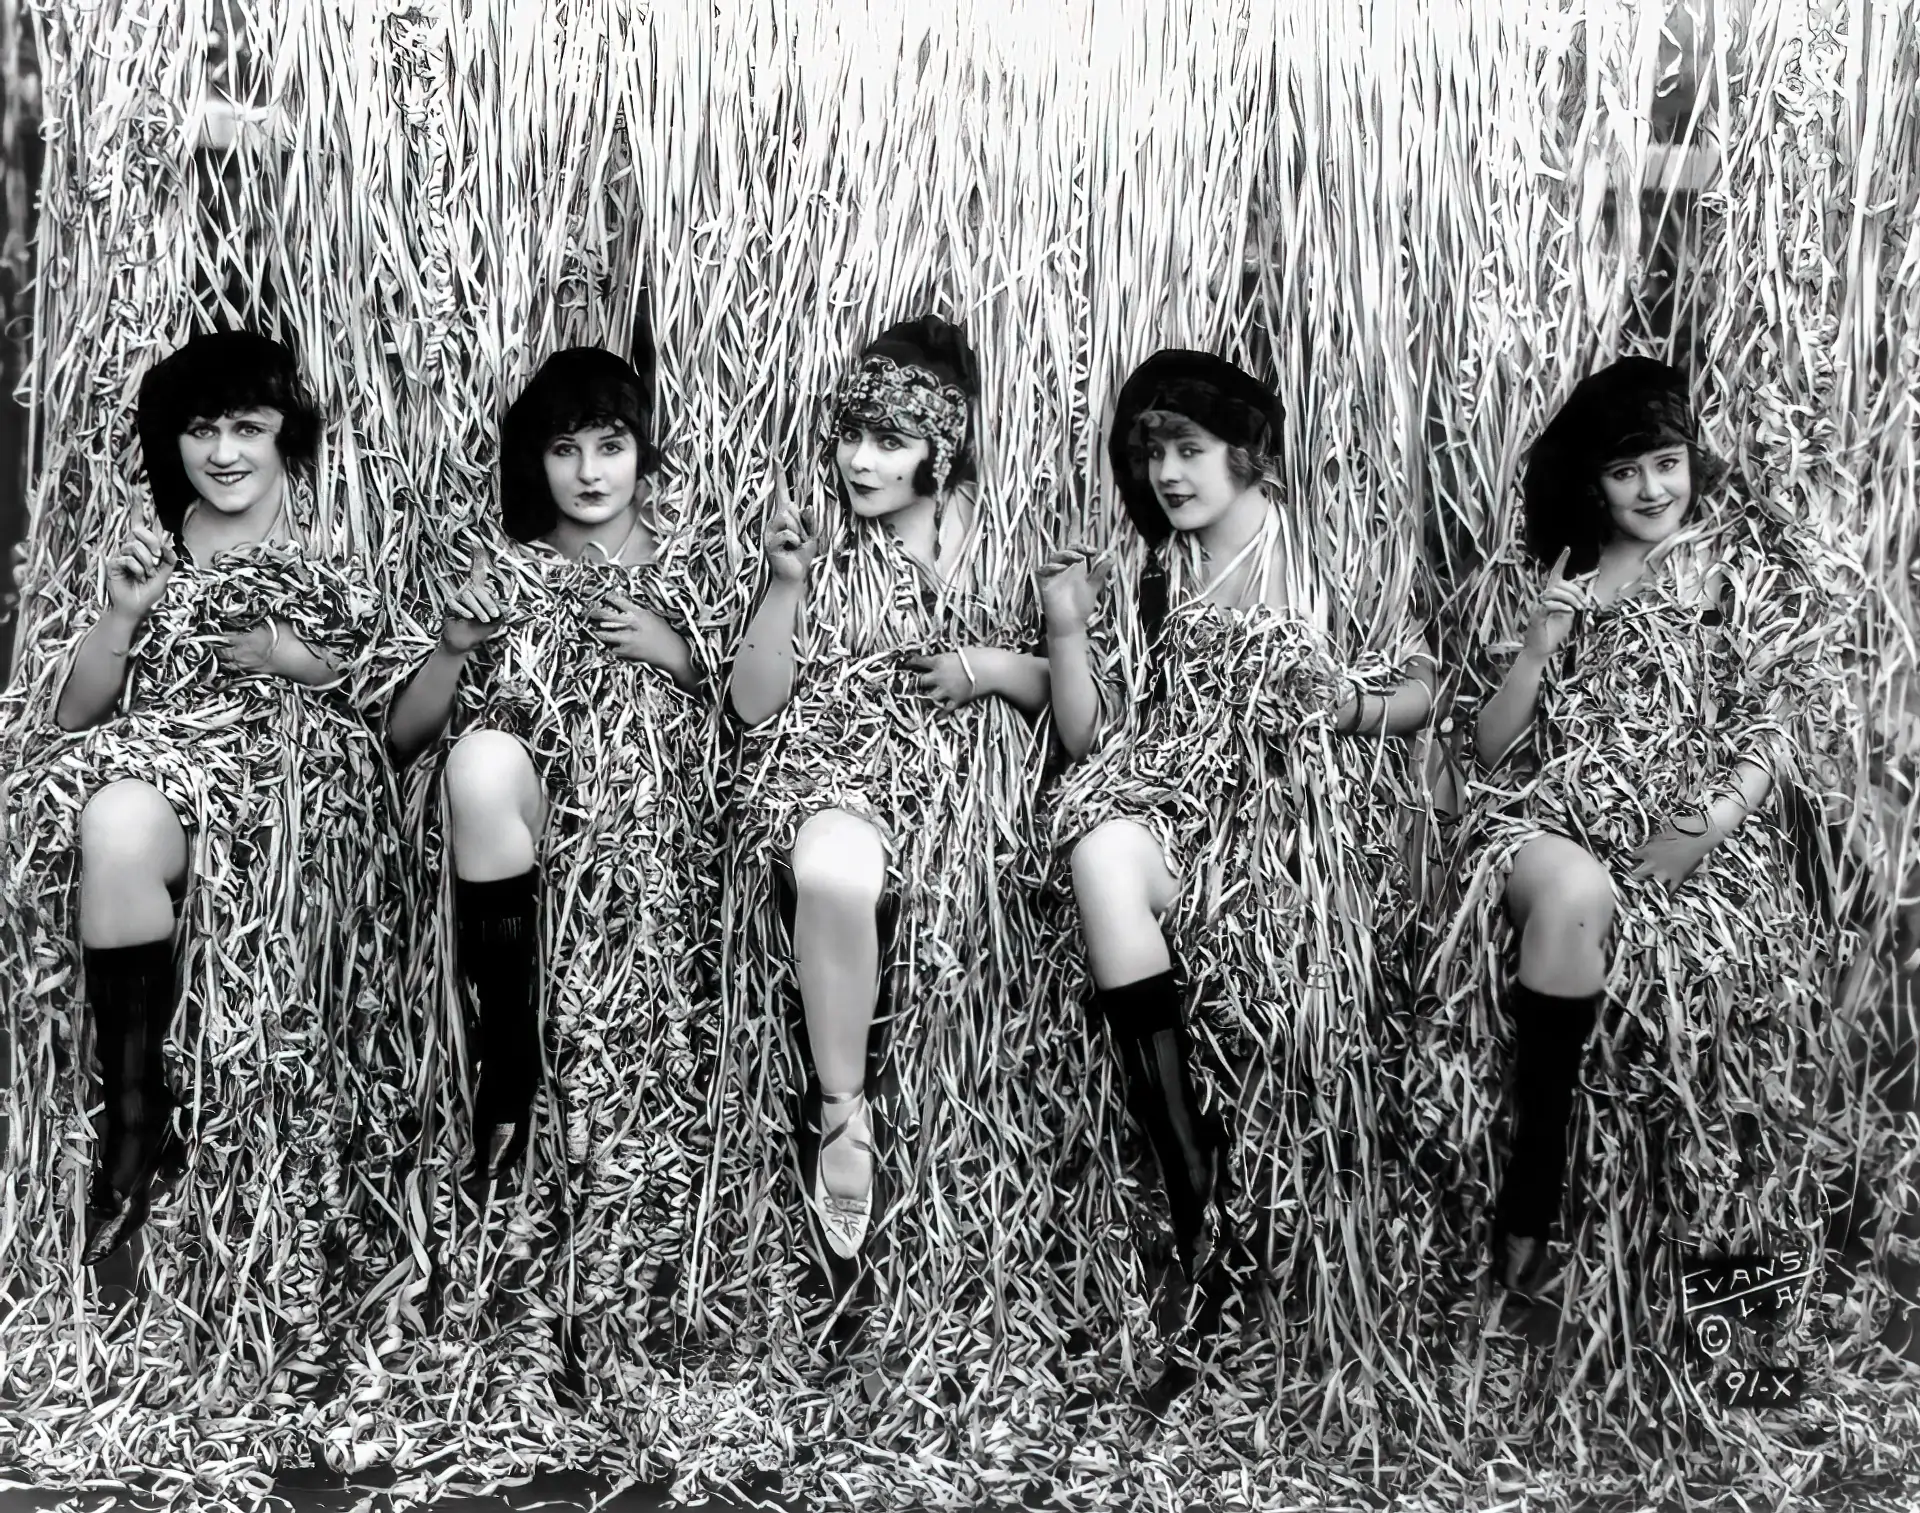 A bunch of burlesque ladies hide behind hanging straps